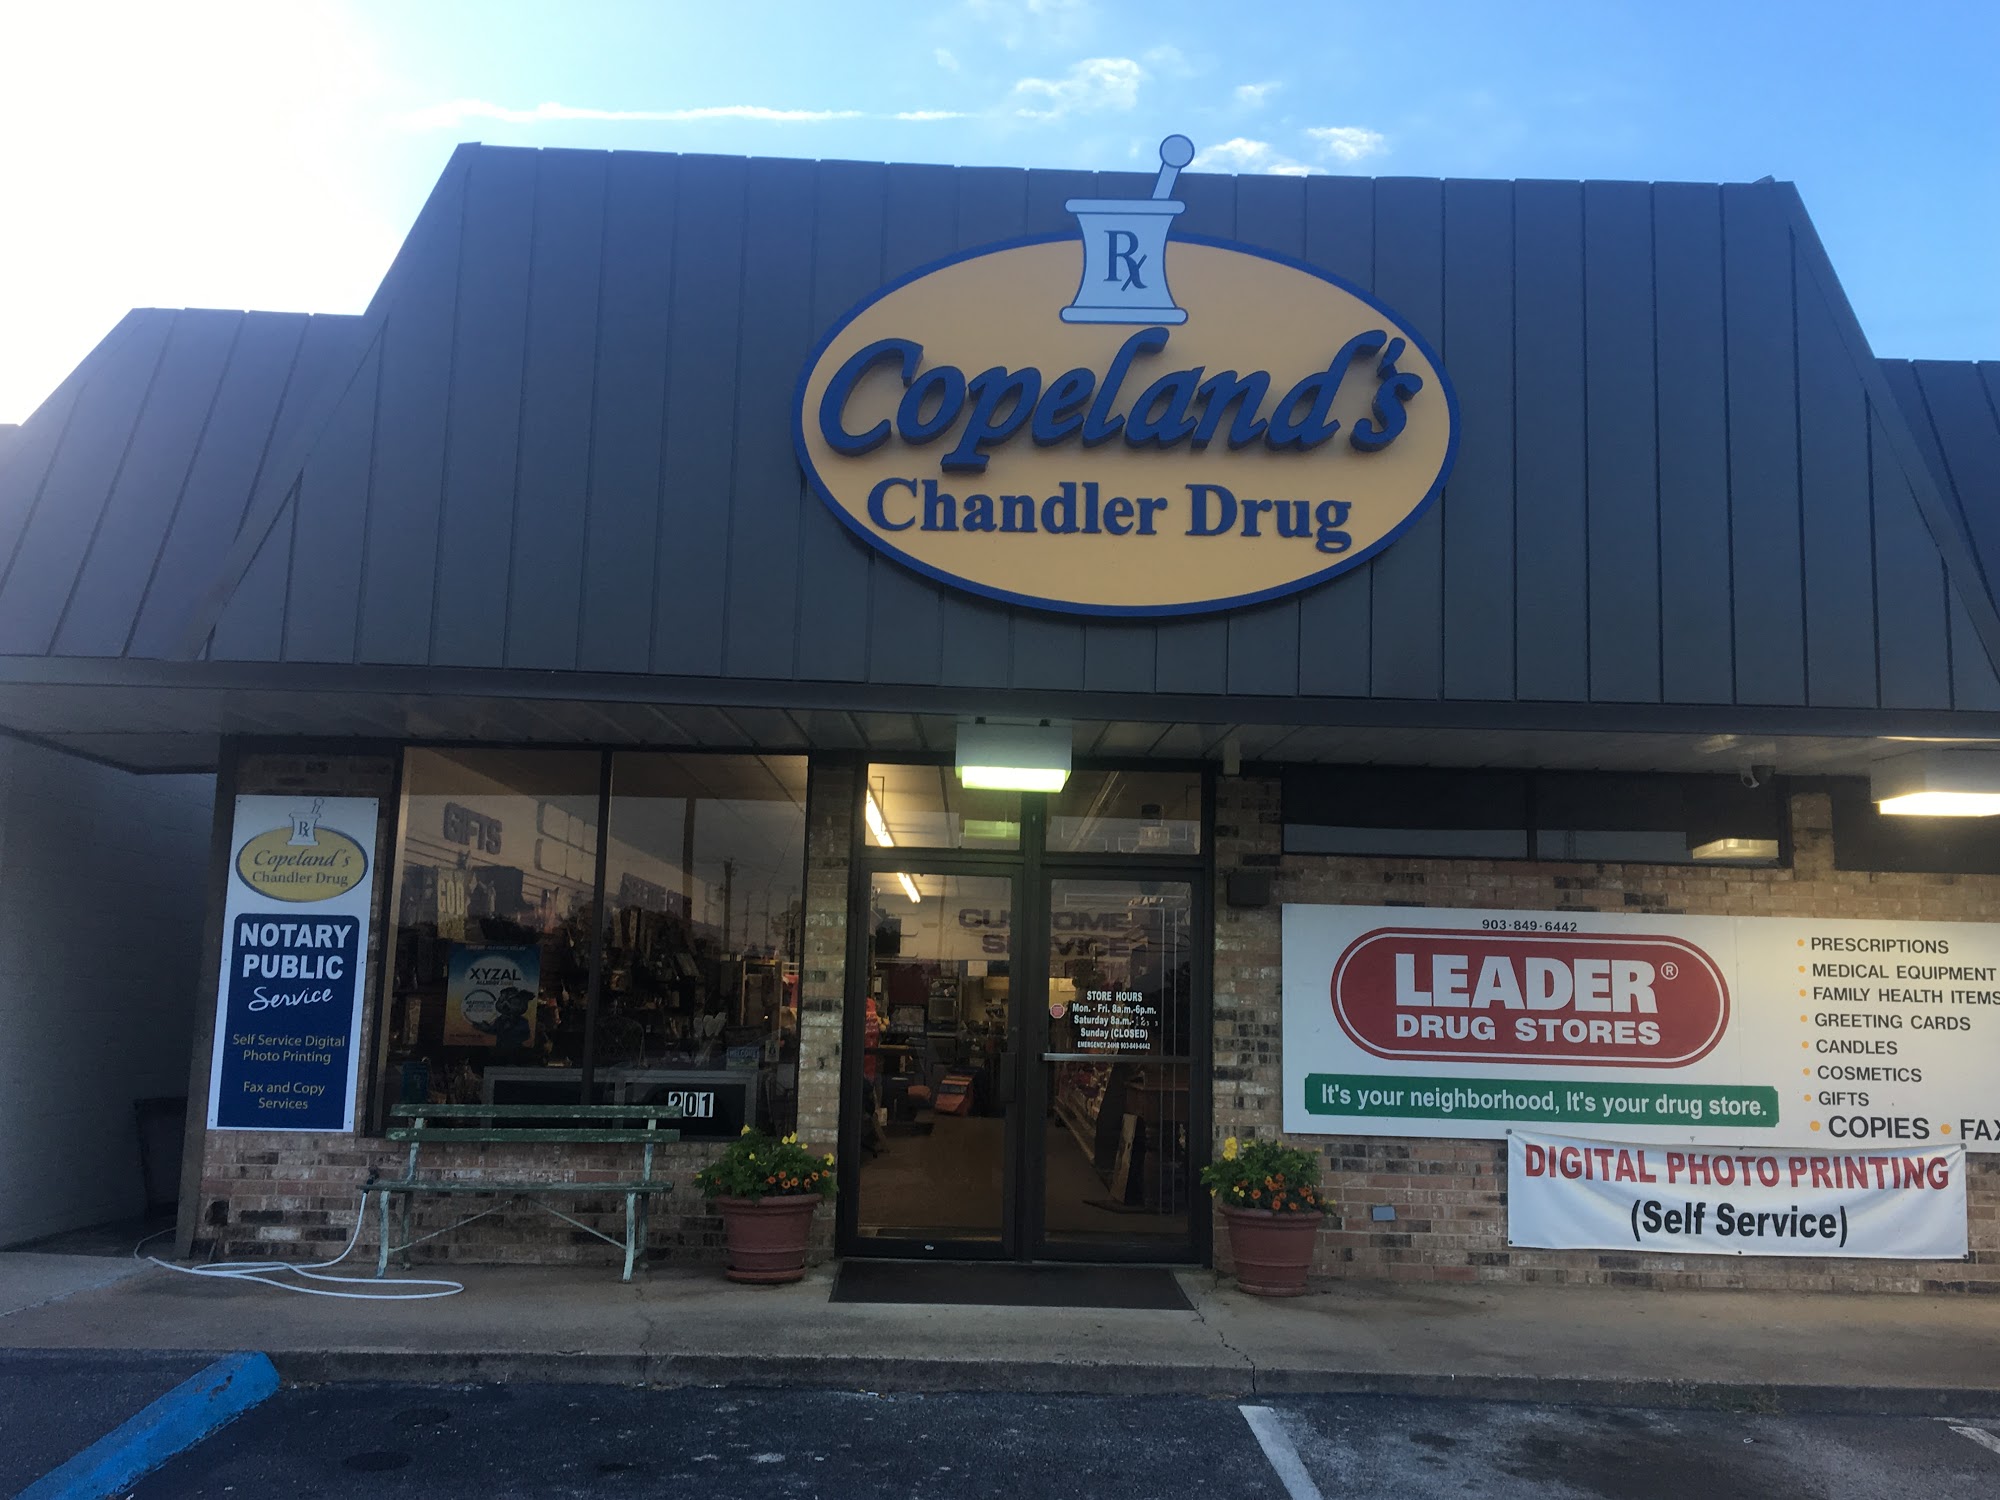 Copeland's Chandler Drug